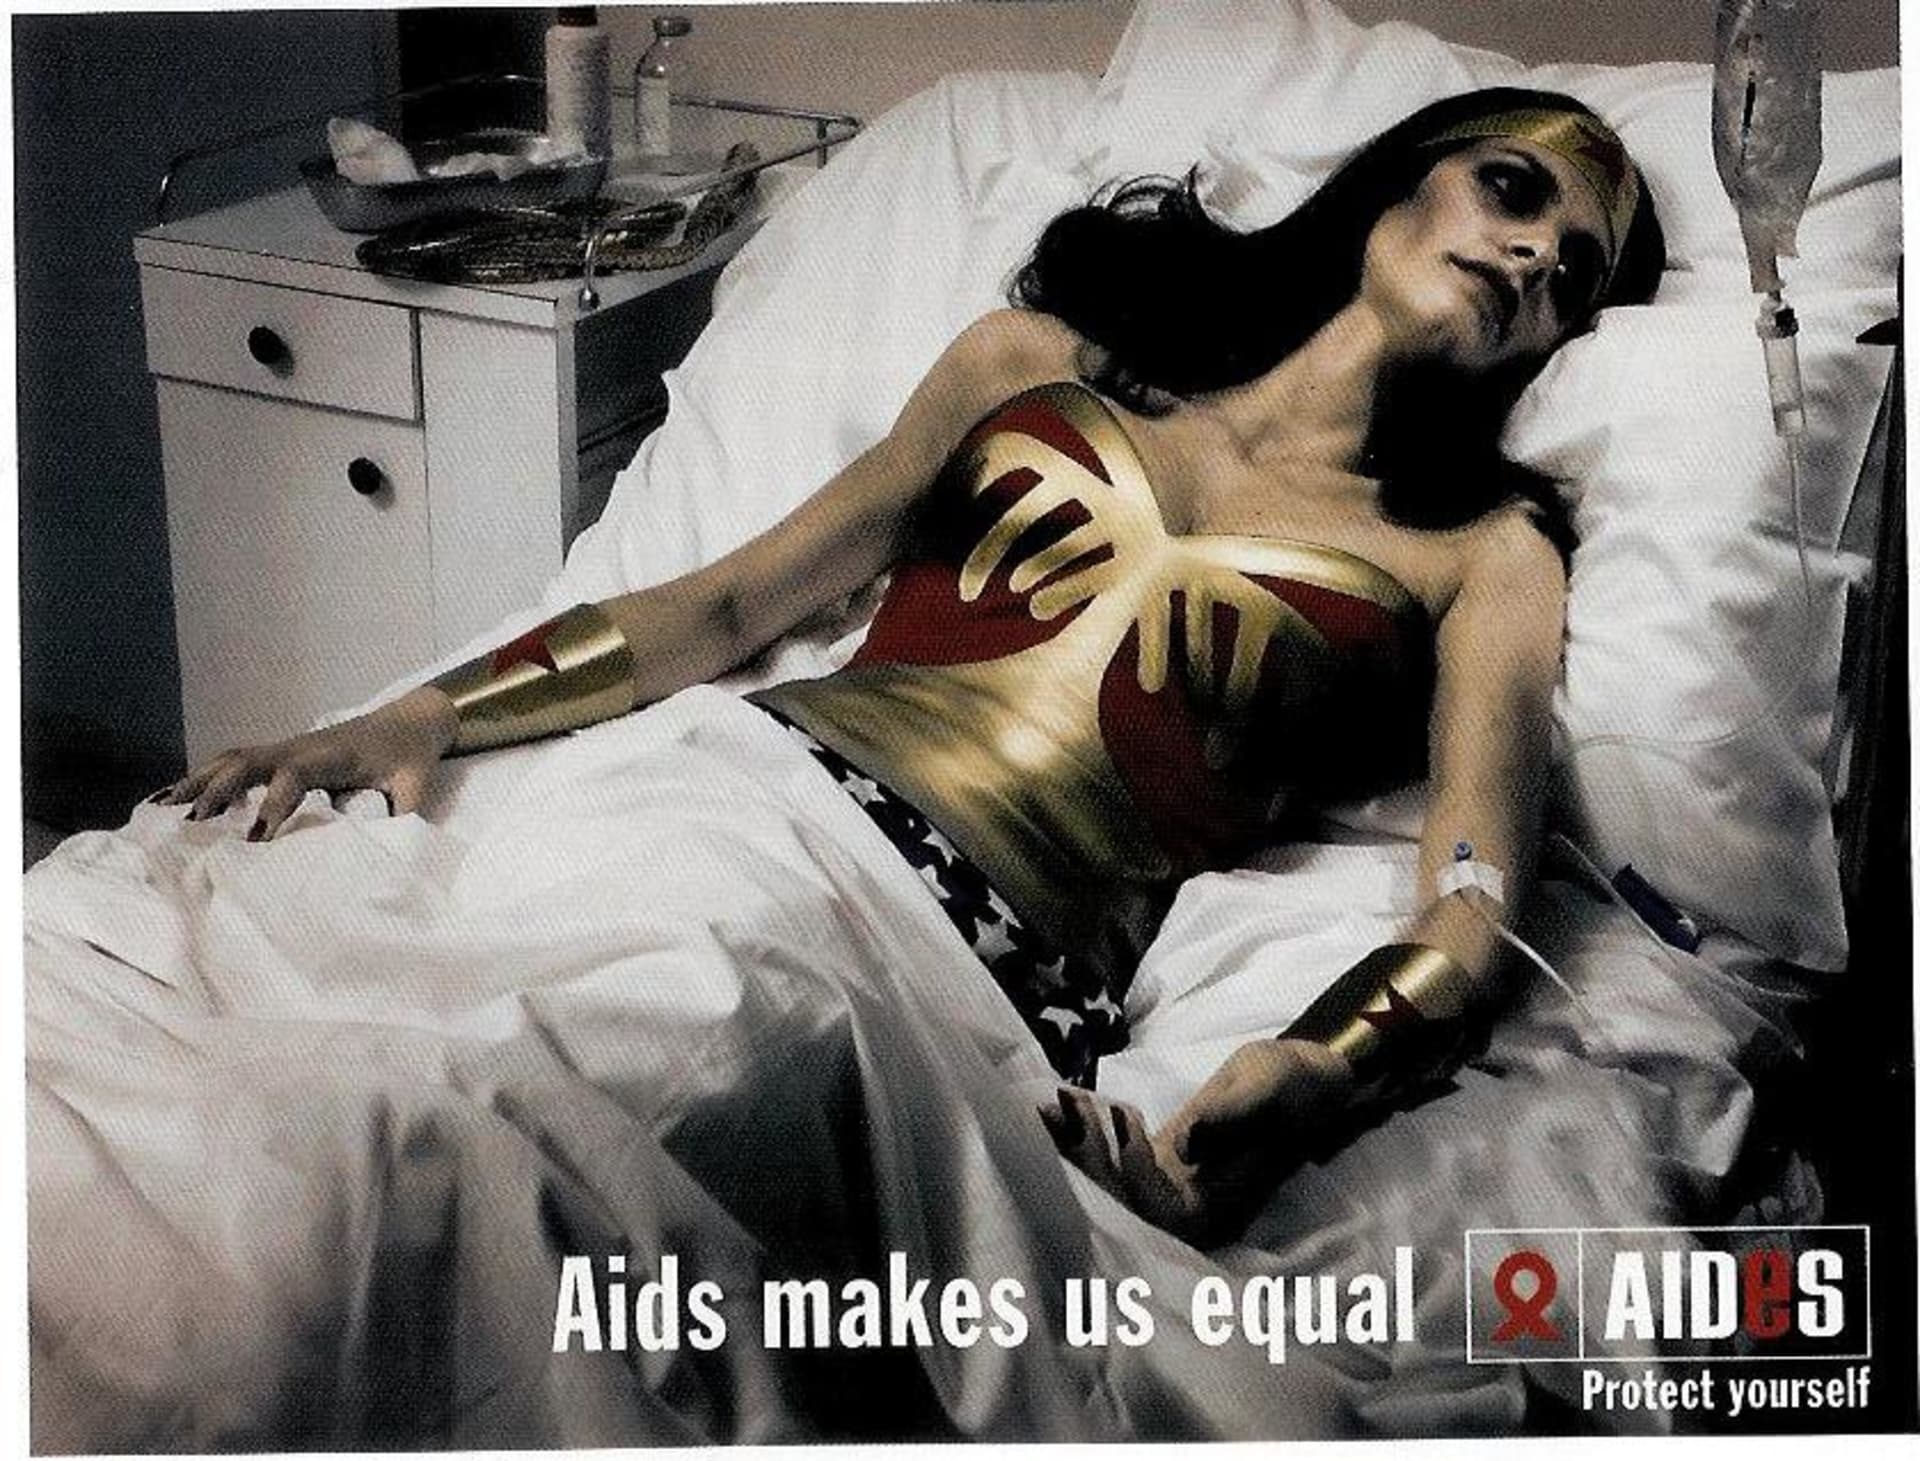 Wonder Woman a AIDS